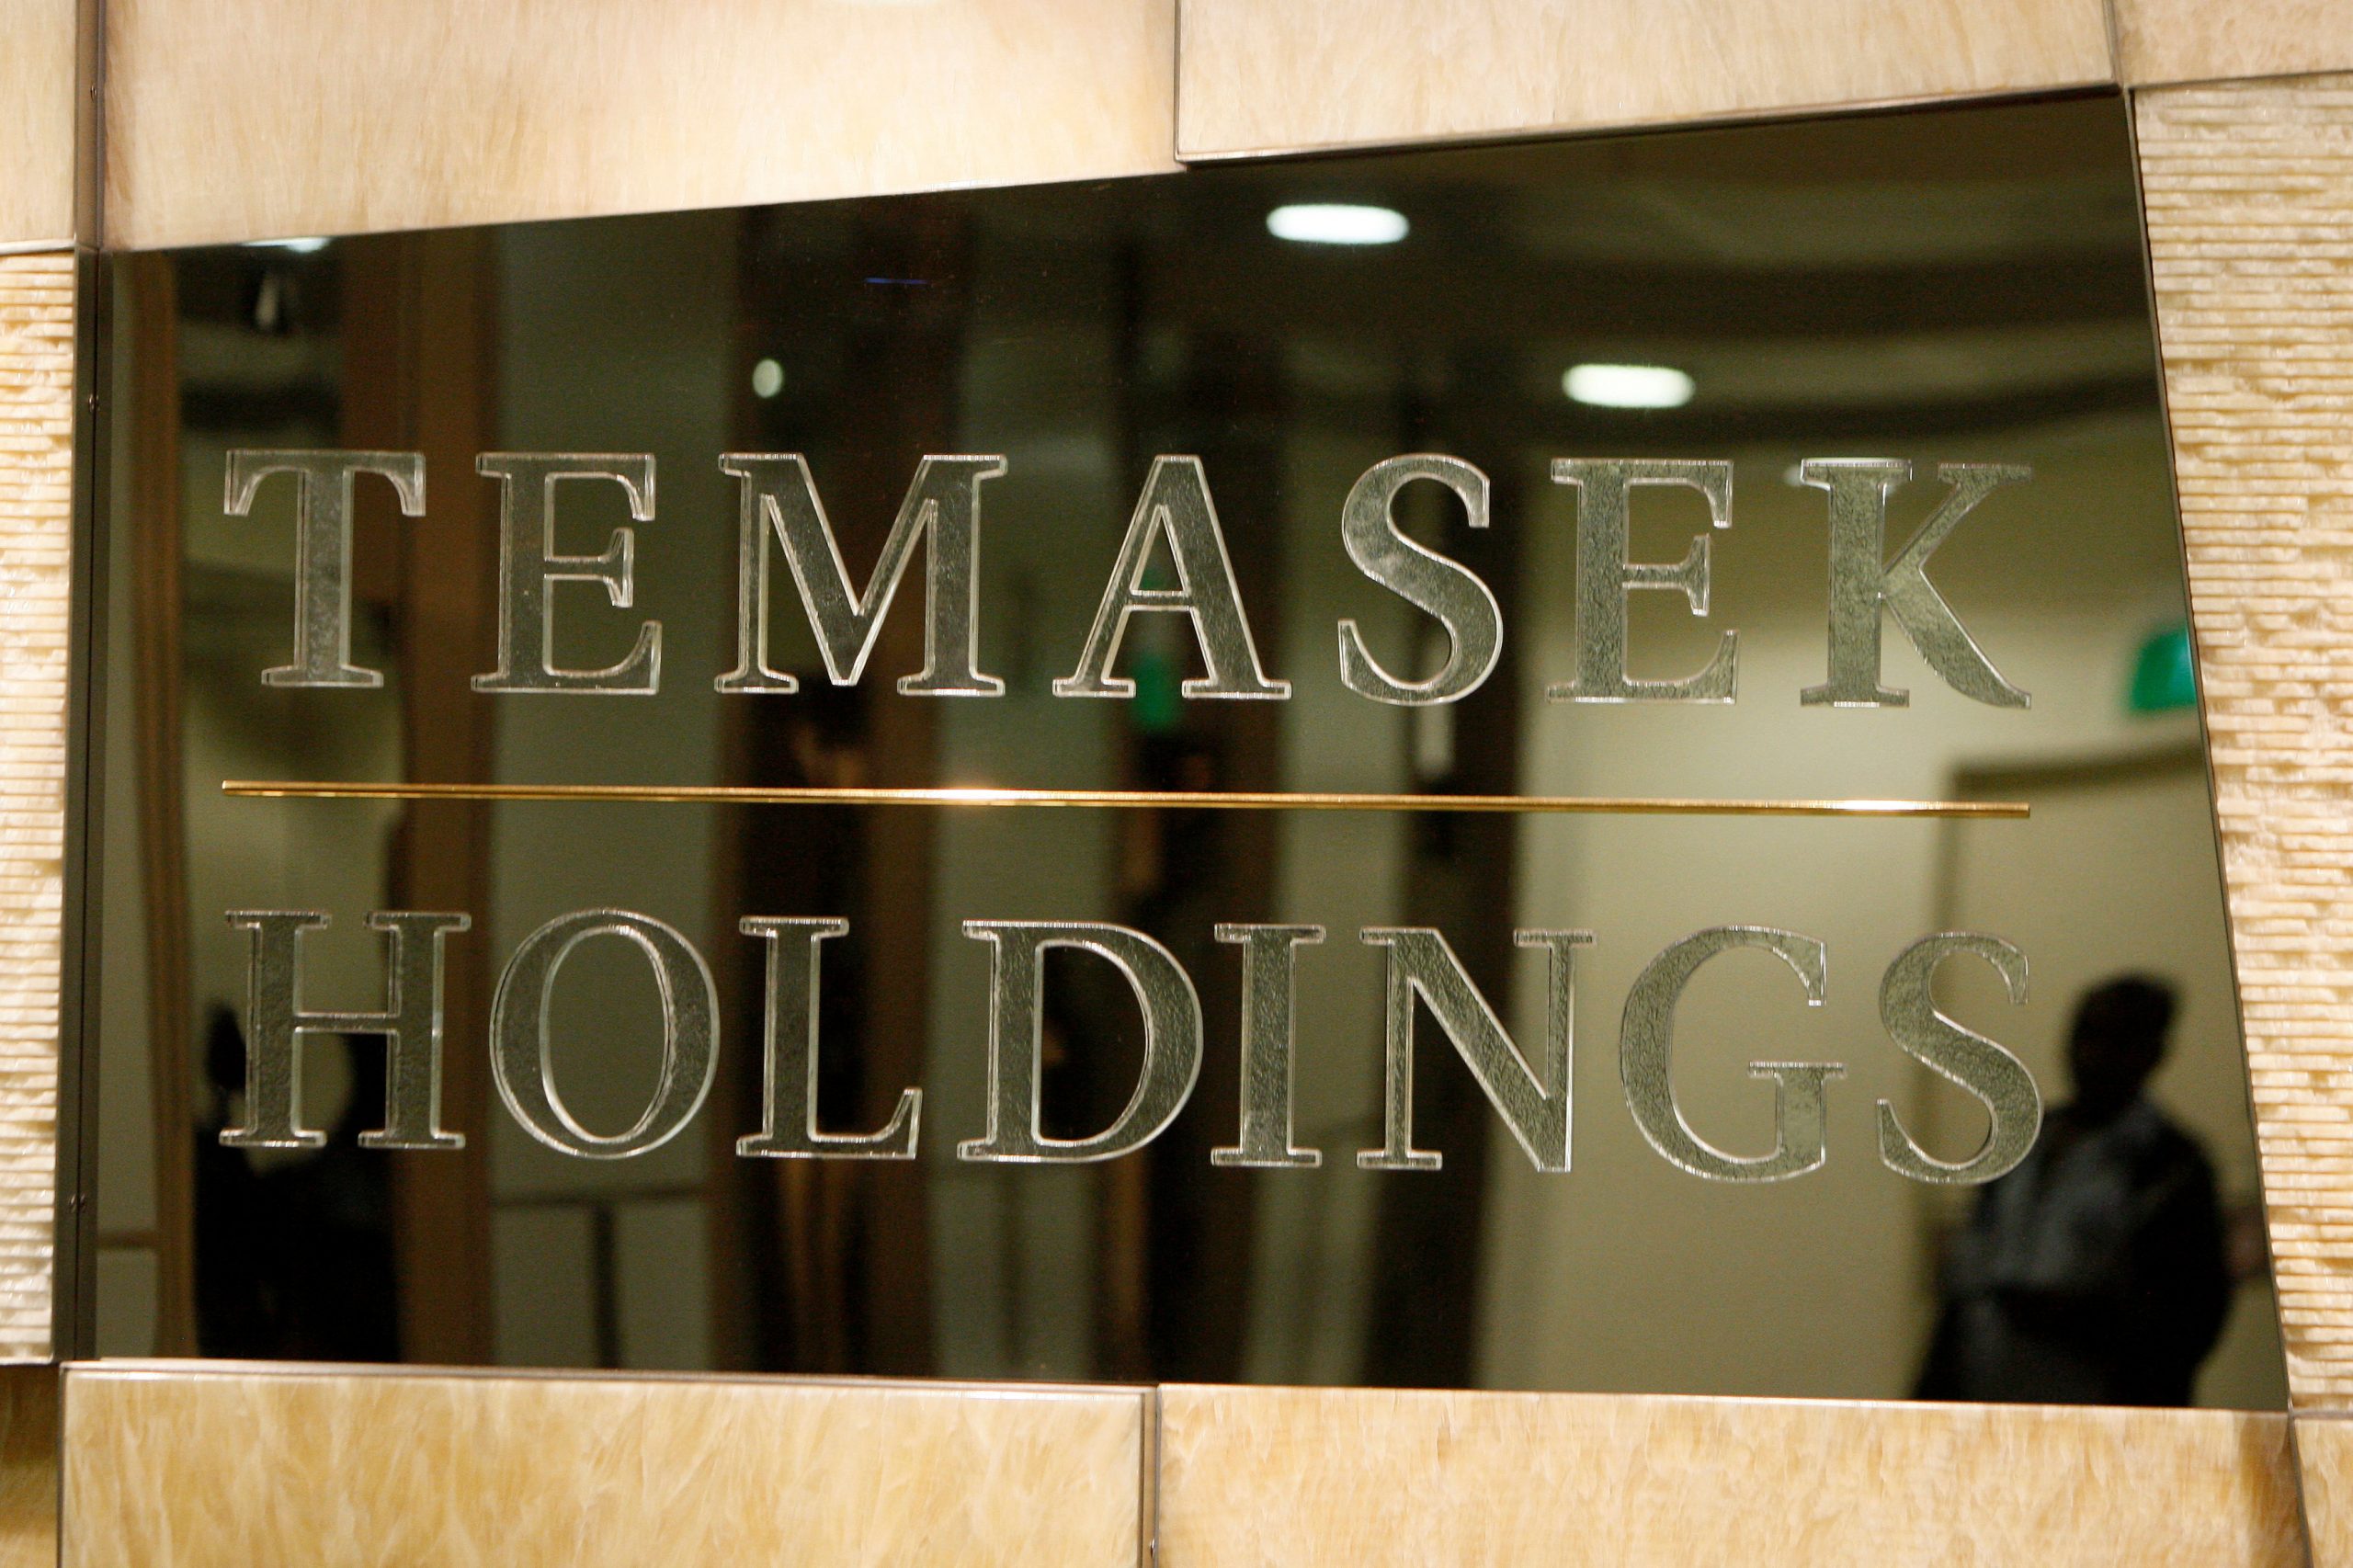 Singapore Temasek Holdings Investment